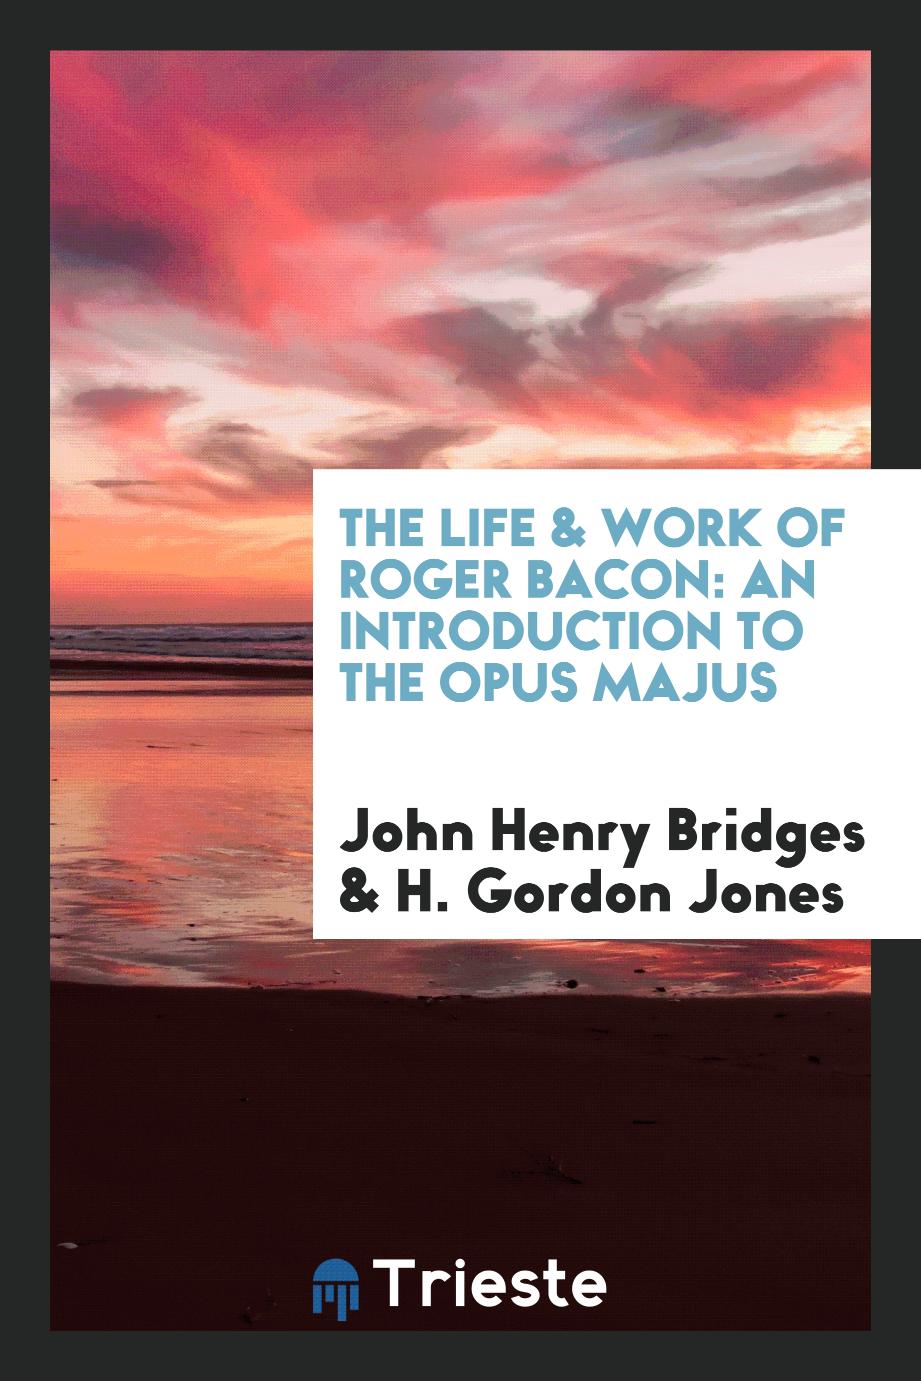 John Henry Bridges, H. Gordon Jones - The life & work of Roger Bacon: an introduction to the Opus majus